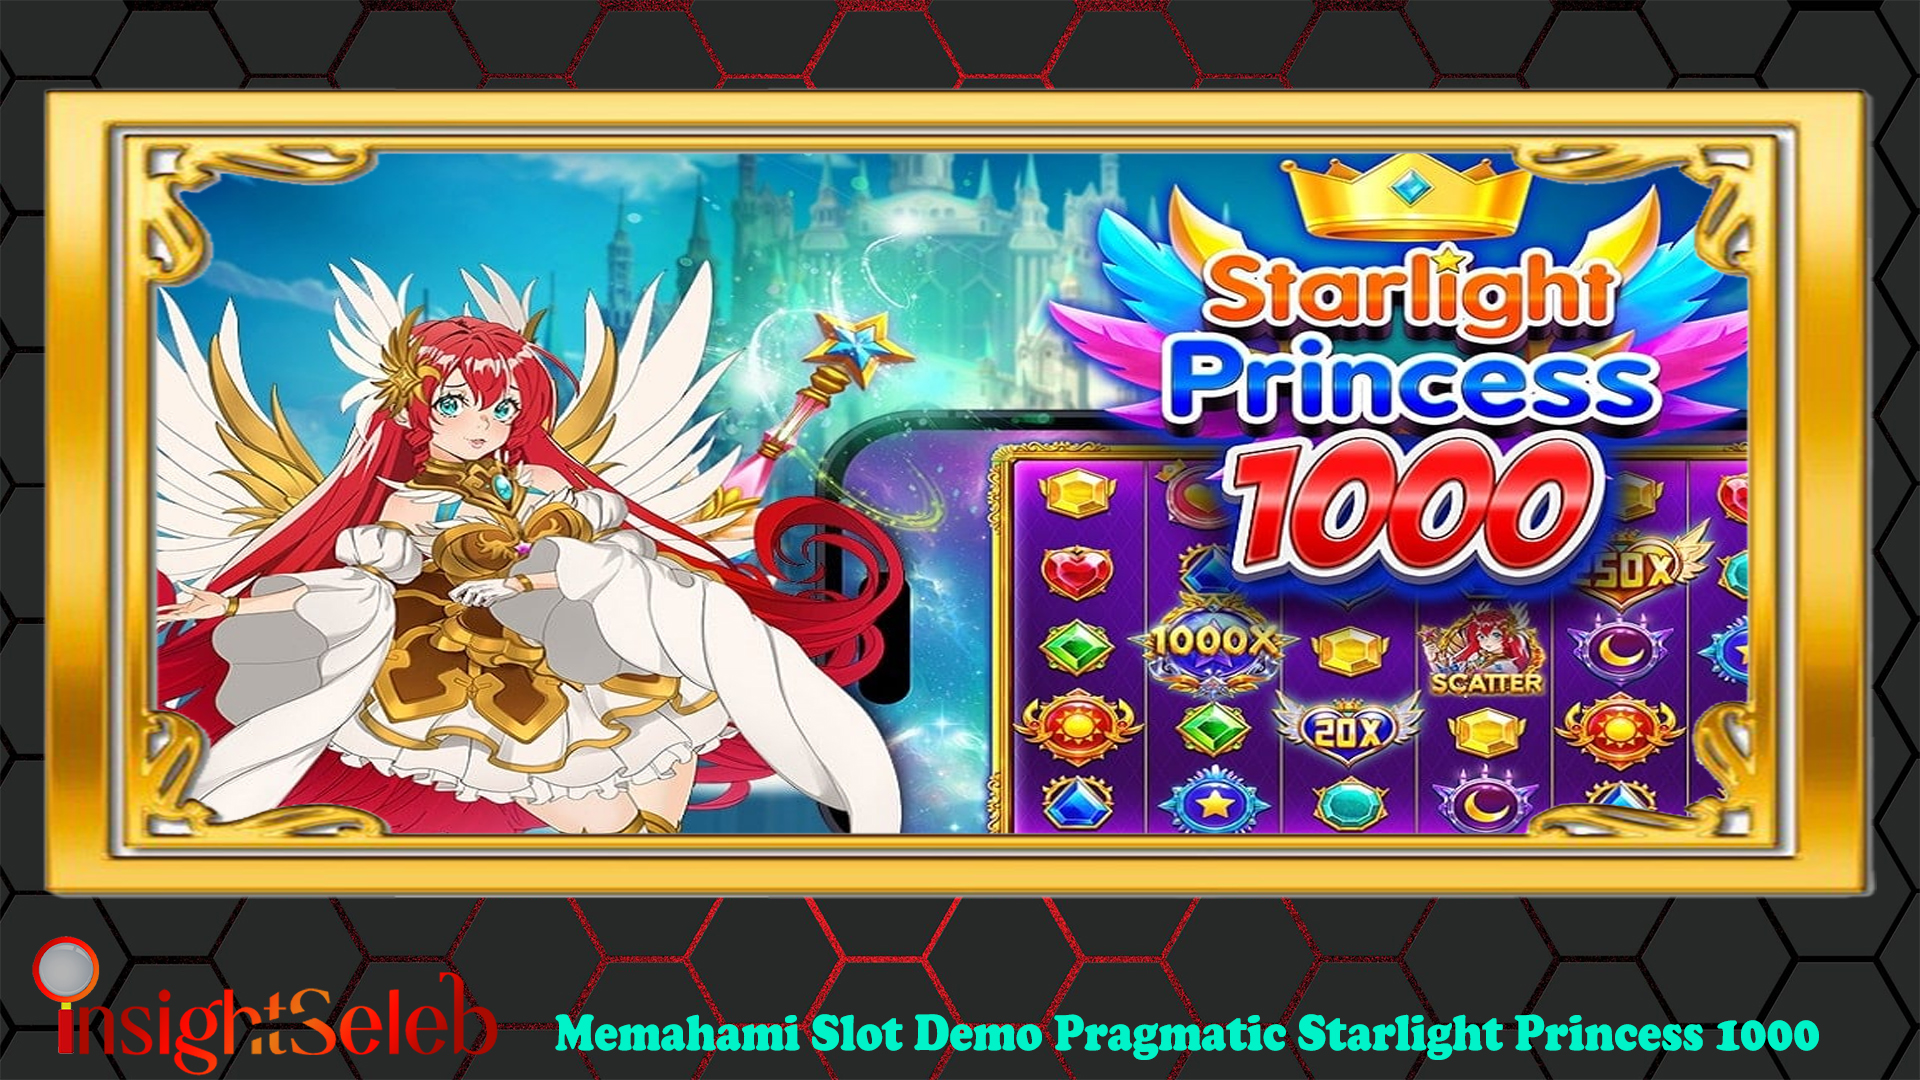 Memahami Slot Demo Pragmatic Starlight Princess 1000